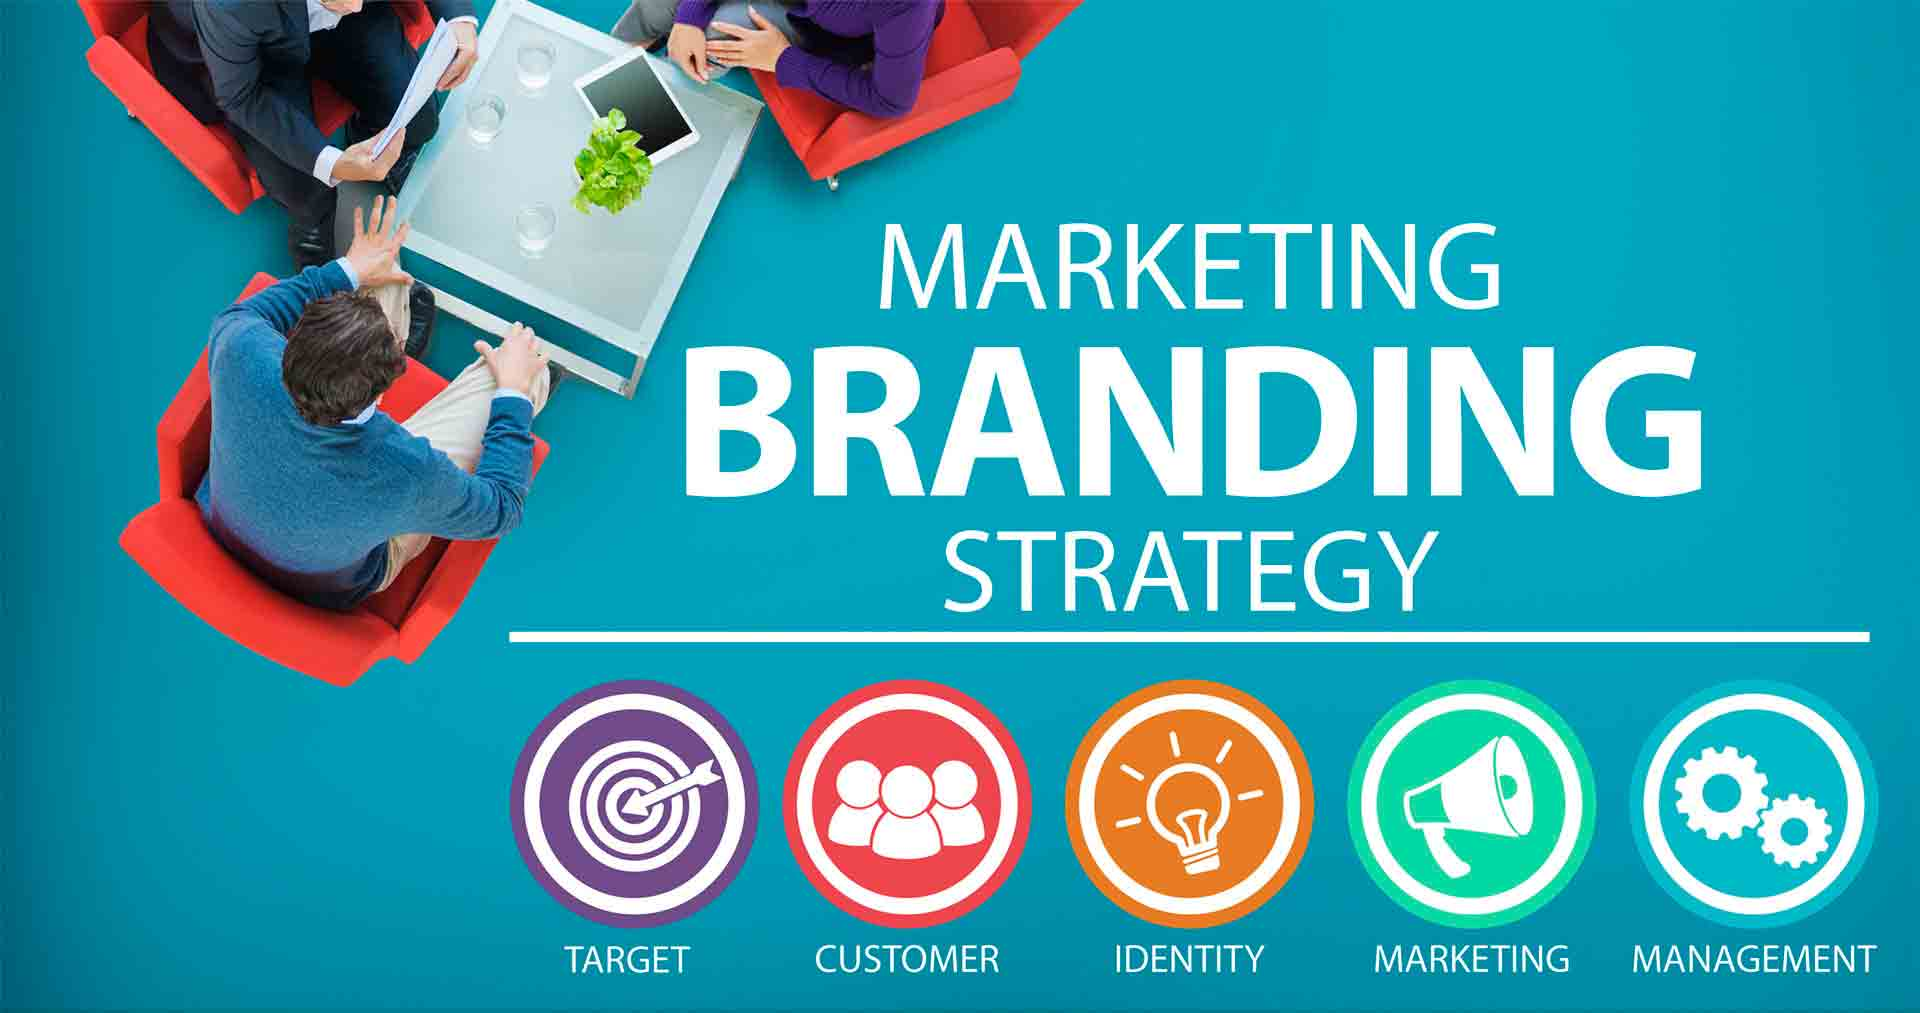 Strategic Brand Communication and Advisory Services